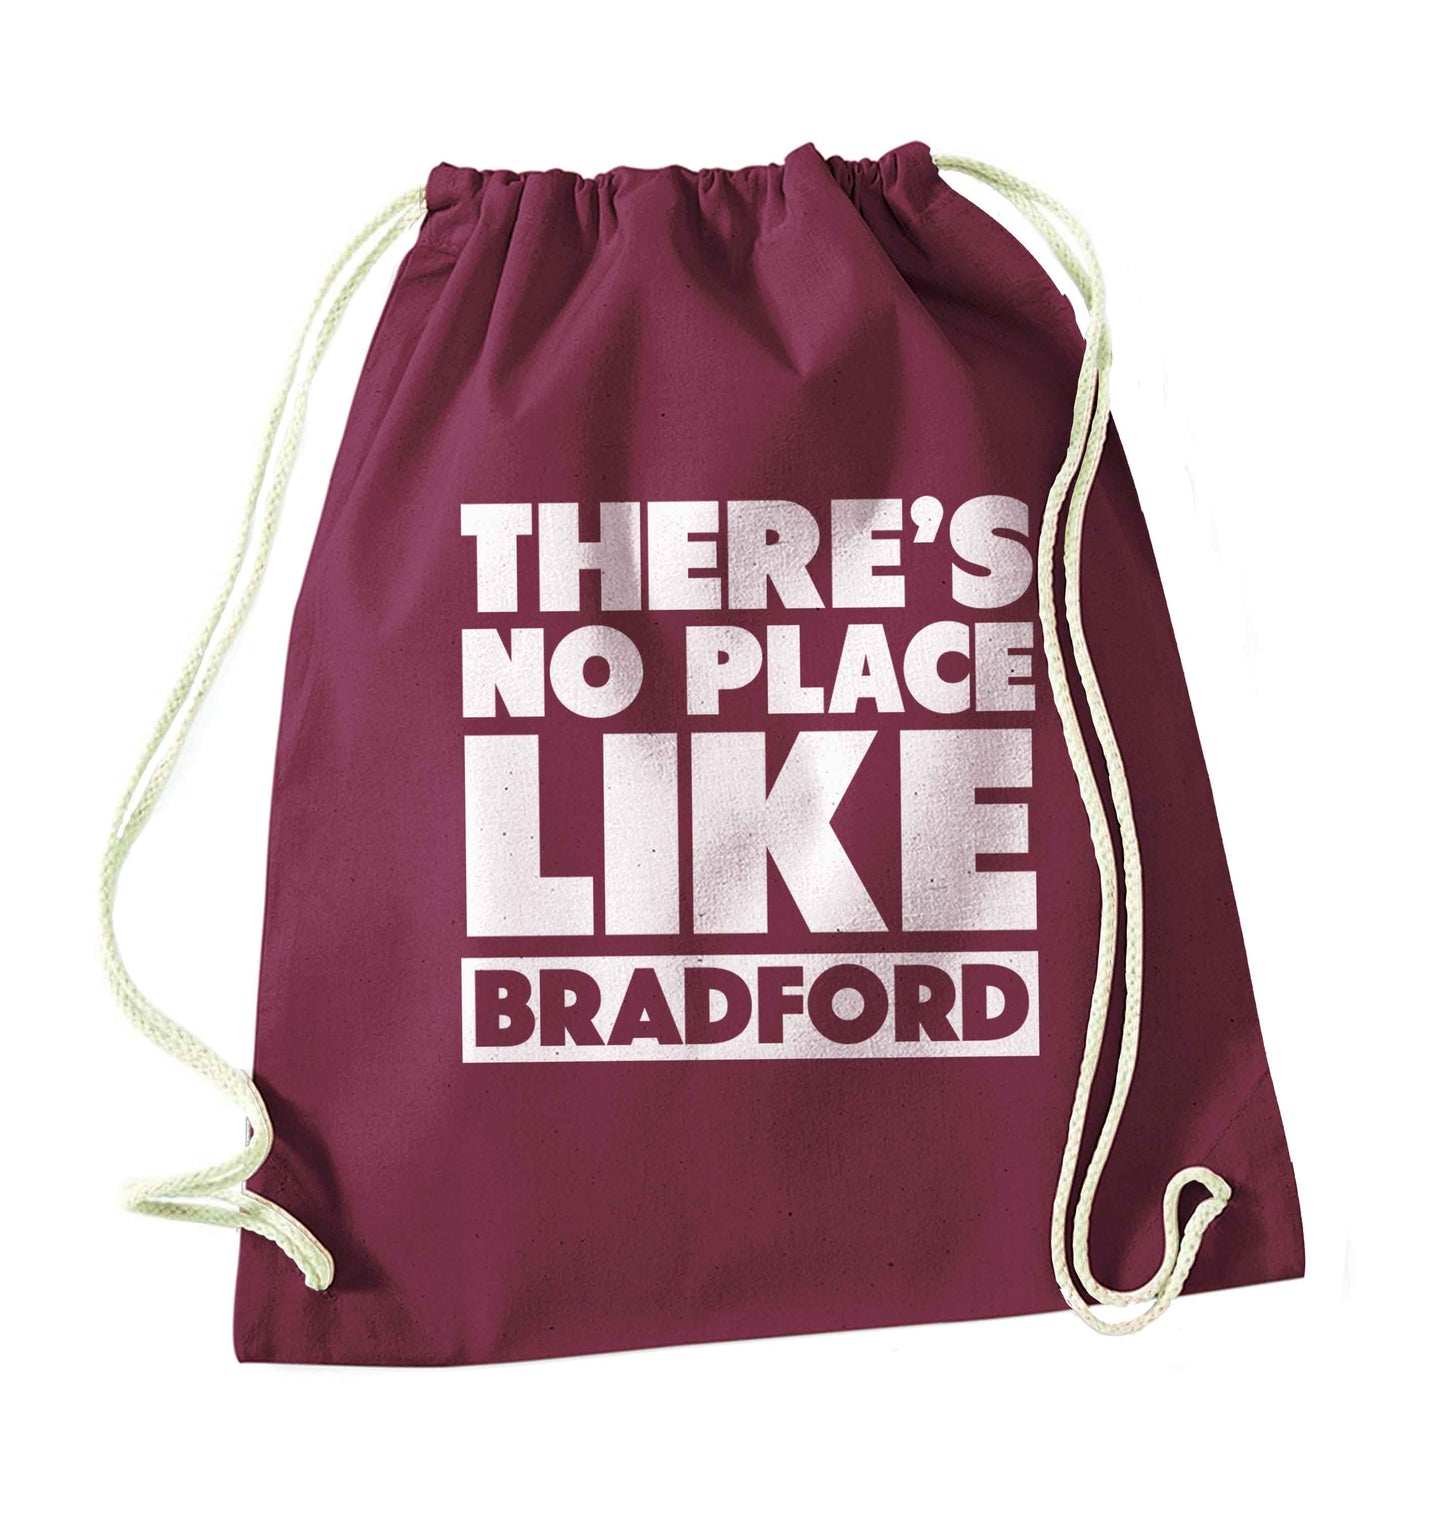 There's no place like Bradford maroon drawstring bag